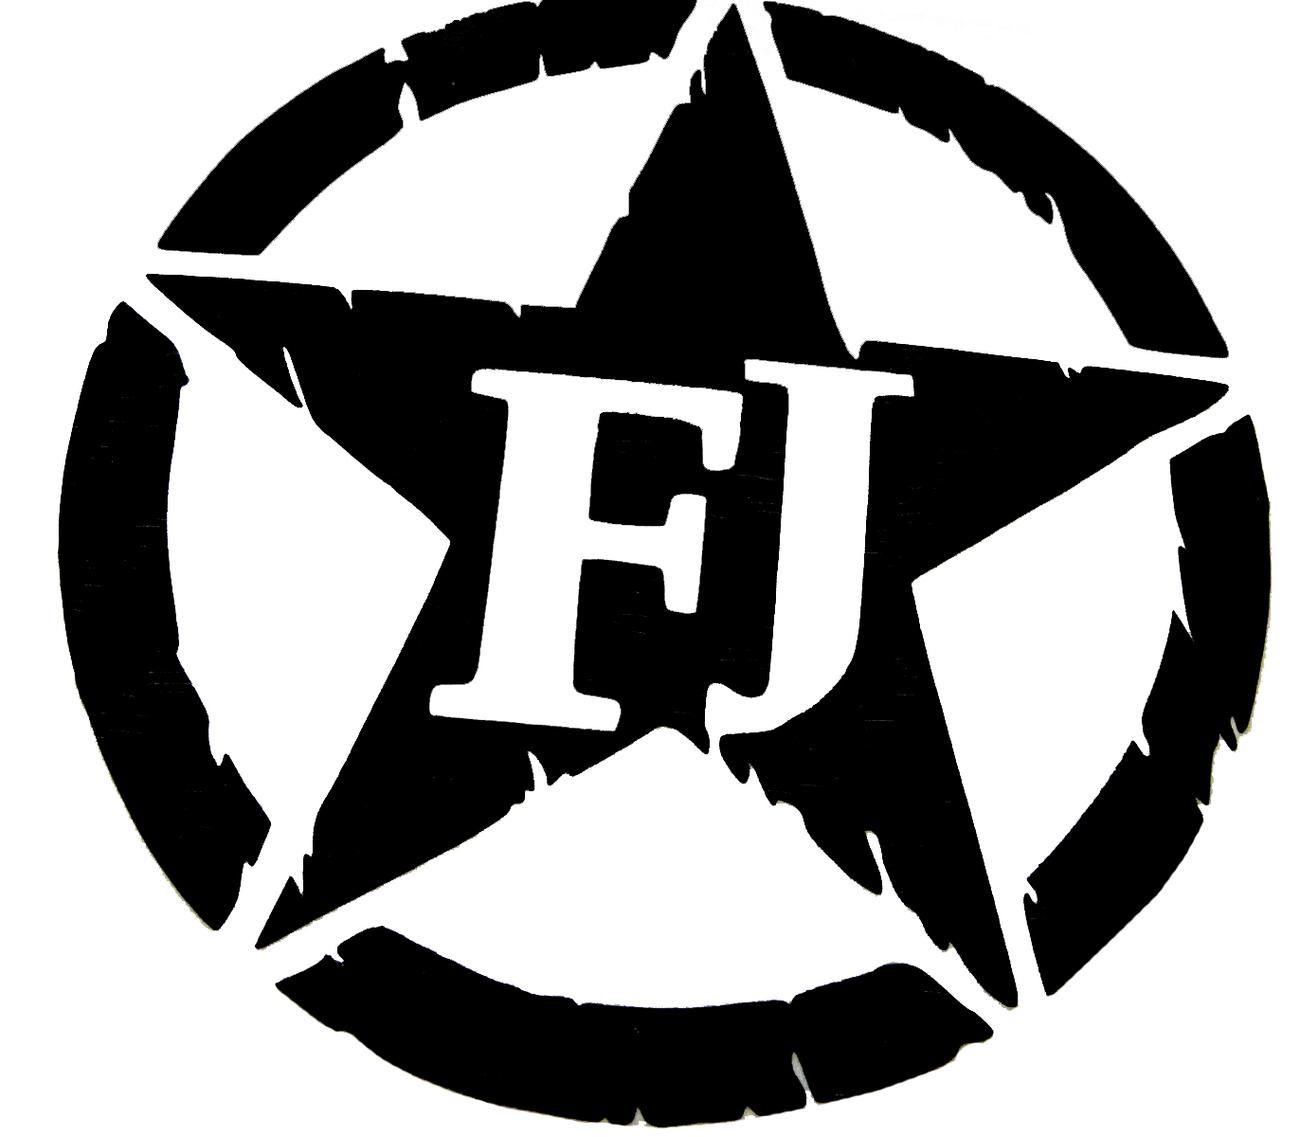 FJ Logo - Toyota FJ Cruiser Military Star 4x4 Off Road Car Decal Sticker